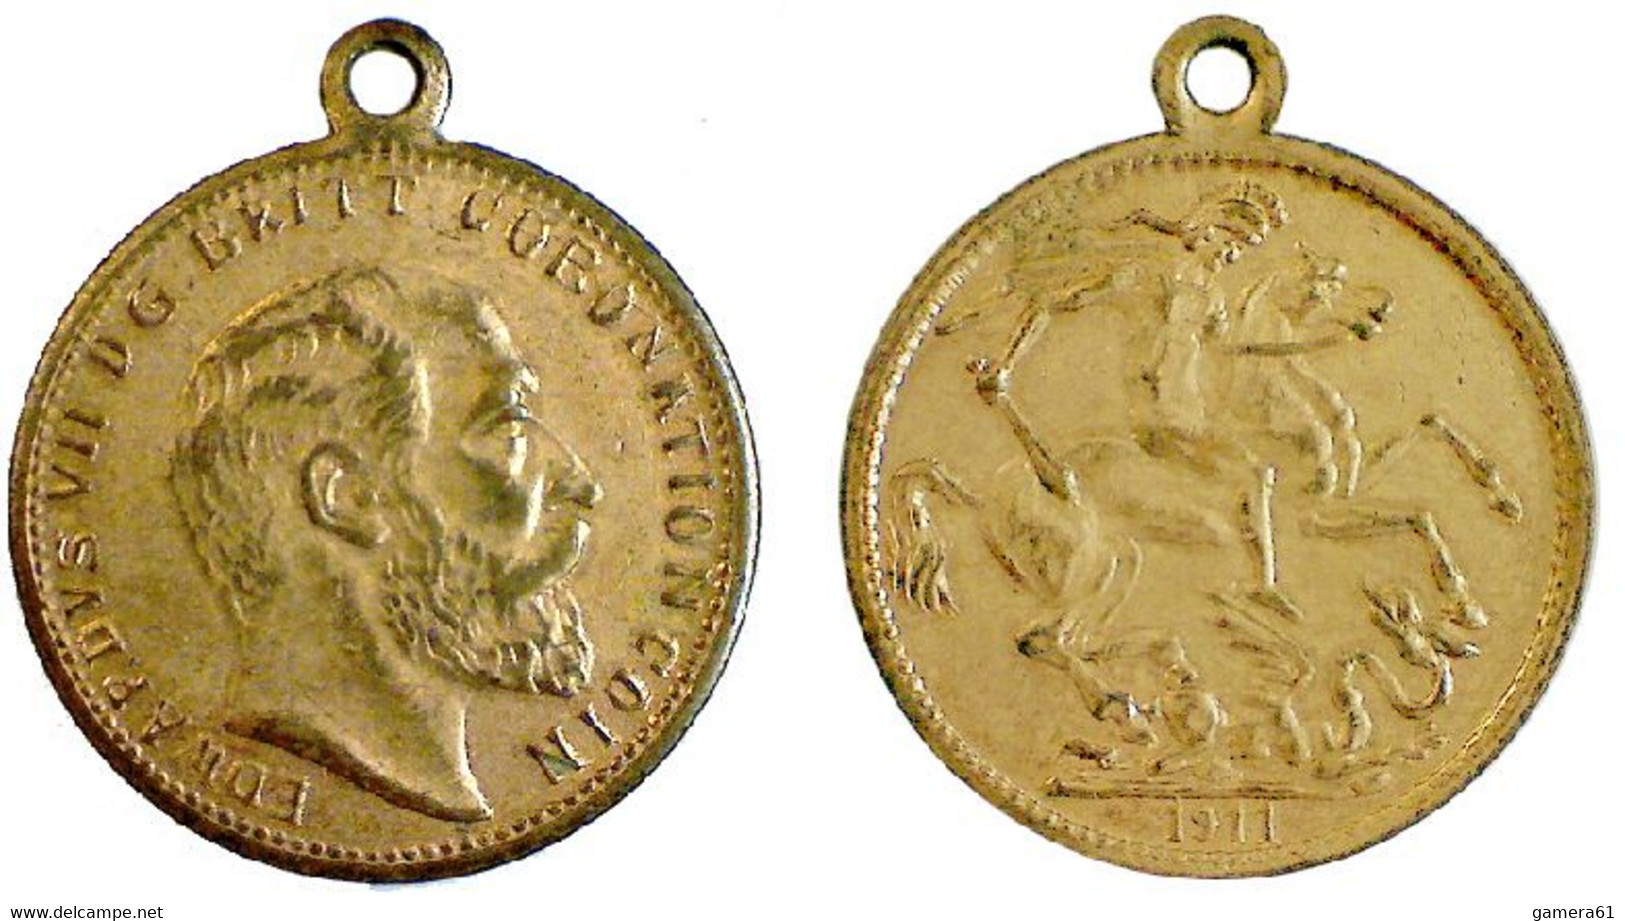 00549 MEDAGLIA COMMEMORATIVA COMMEMORATIVE MEDAL EDWARDS VII DG BRITT CORONATION COIN 1911 - Royal/Of Nobility